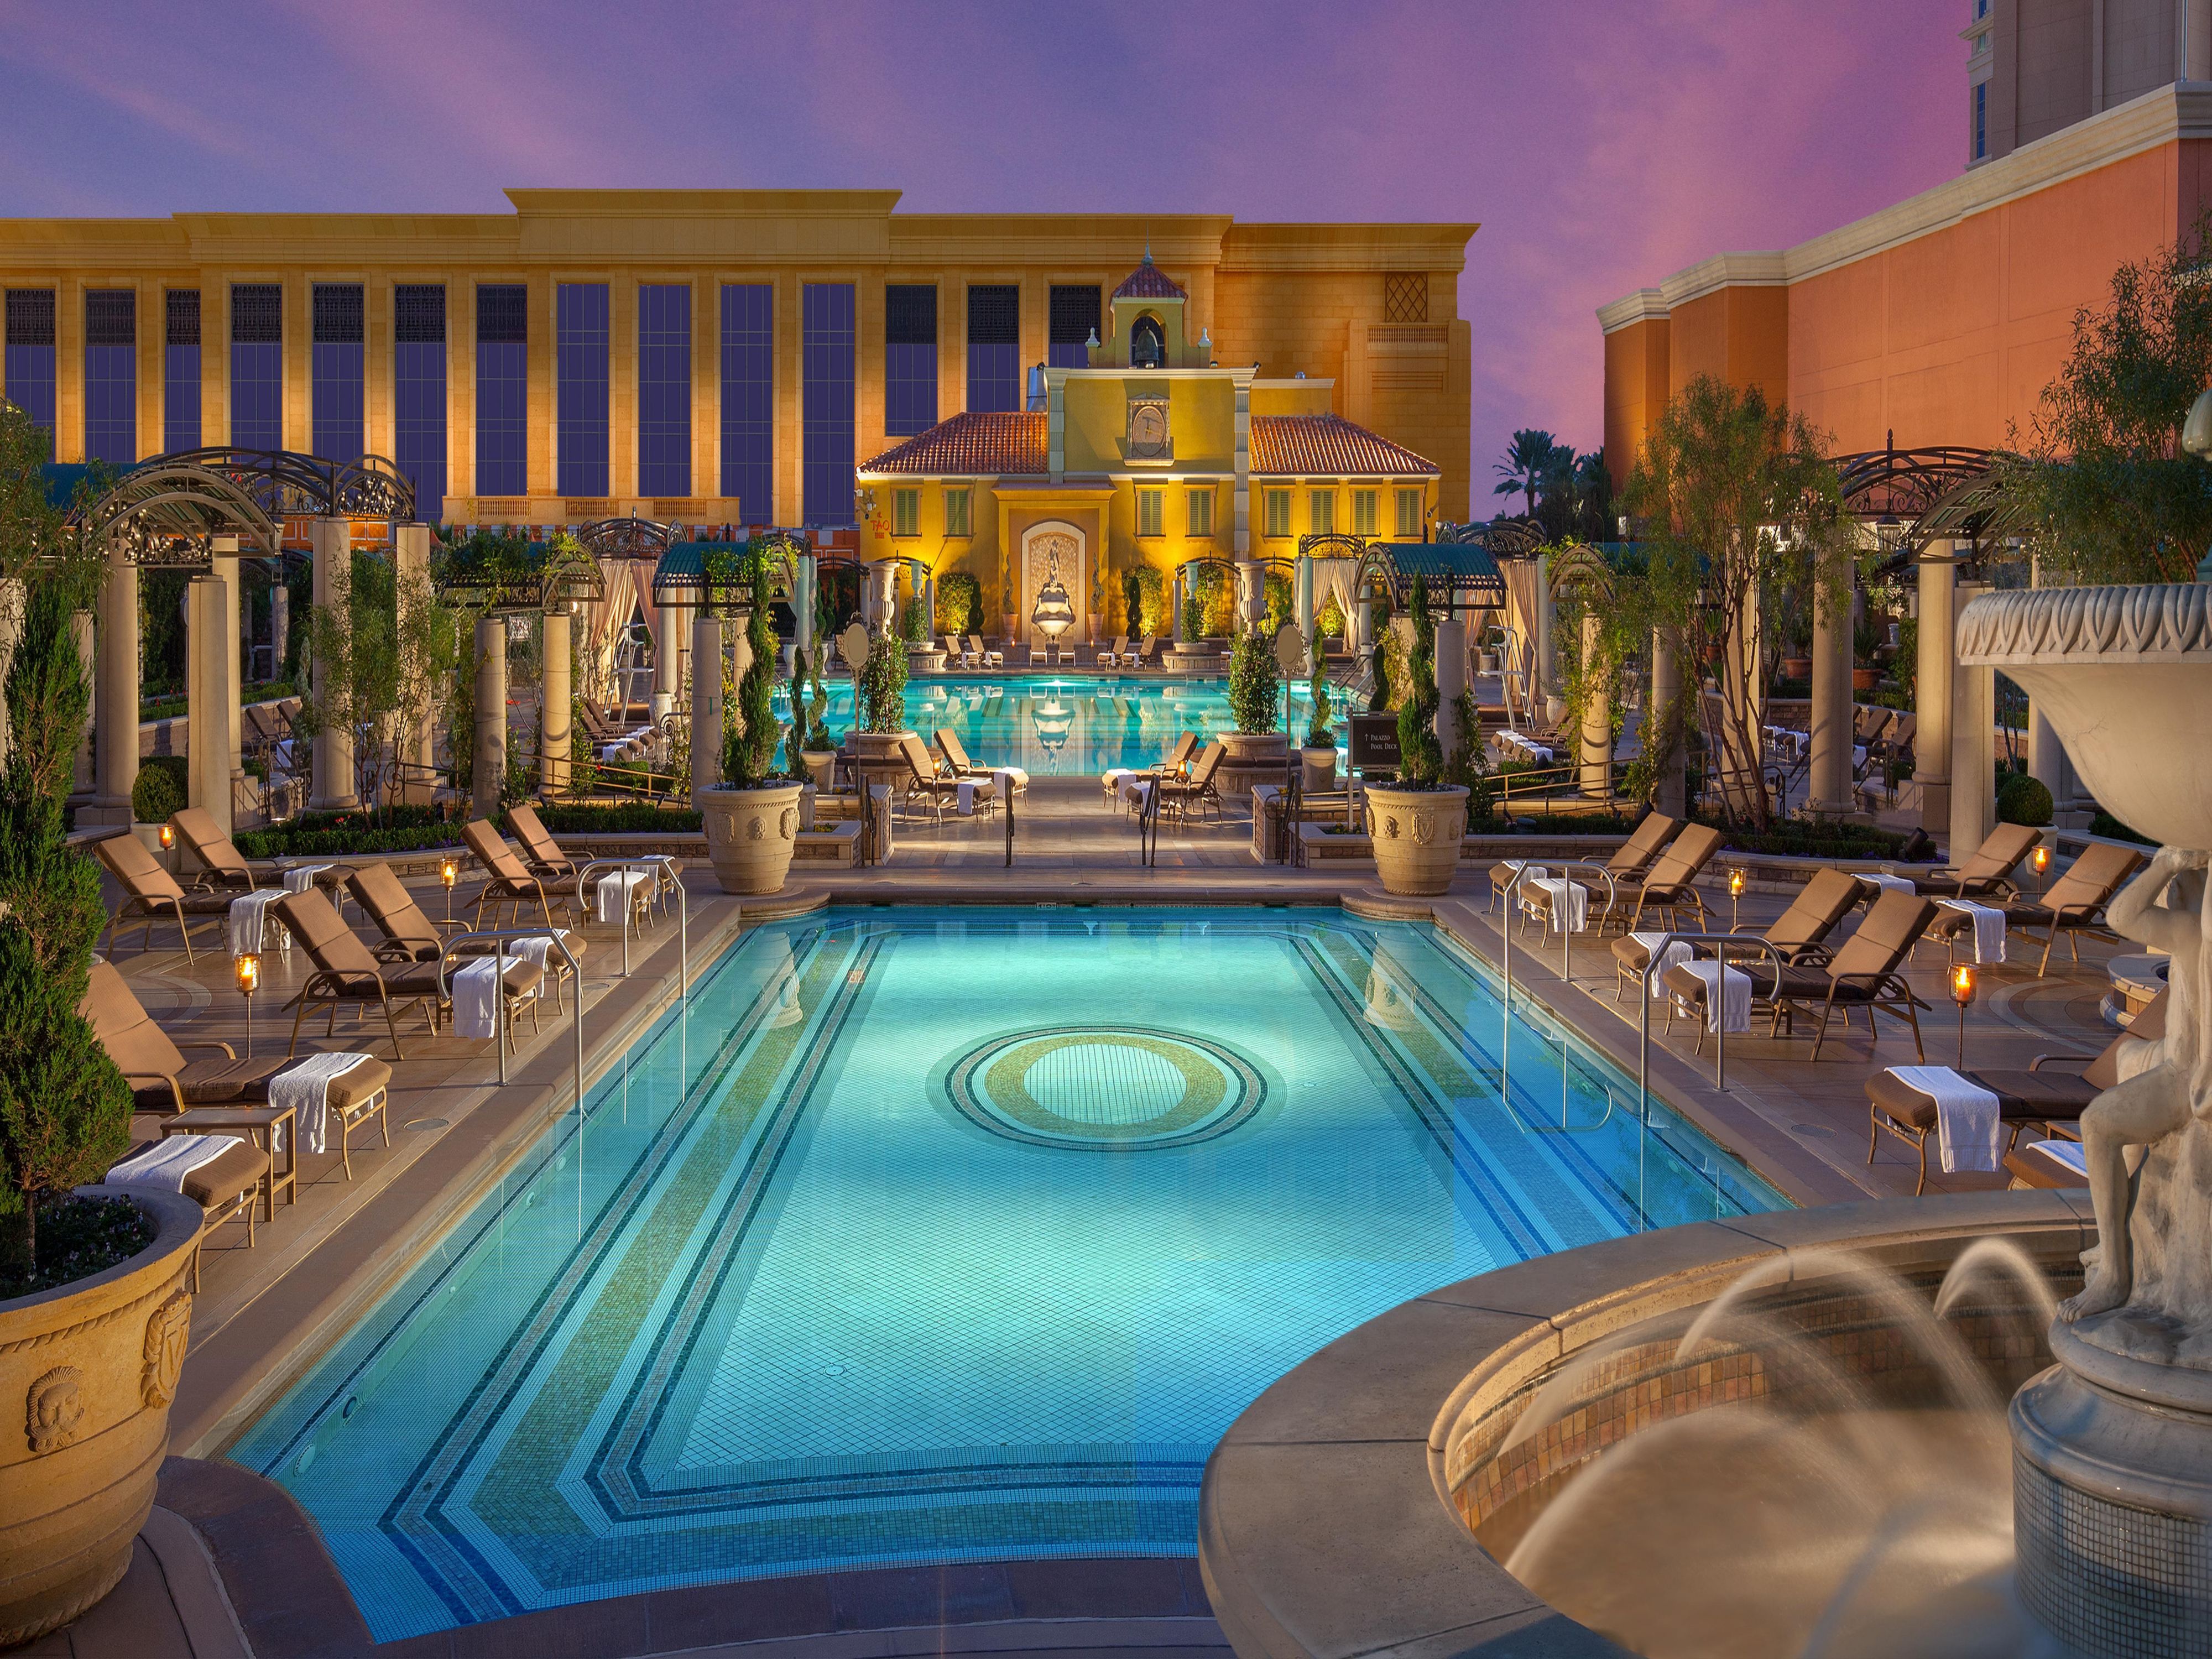 InterContinental Alliance Resorts in Las Vegas, NV